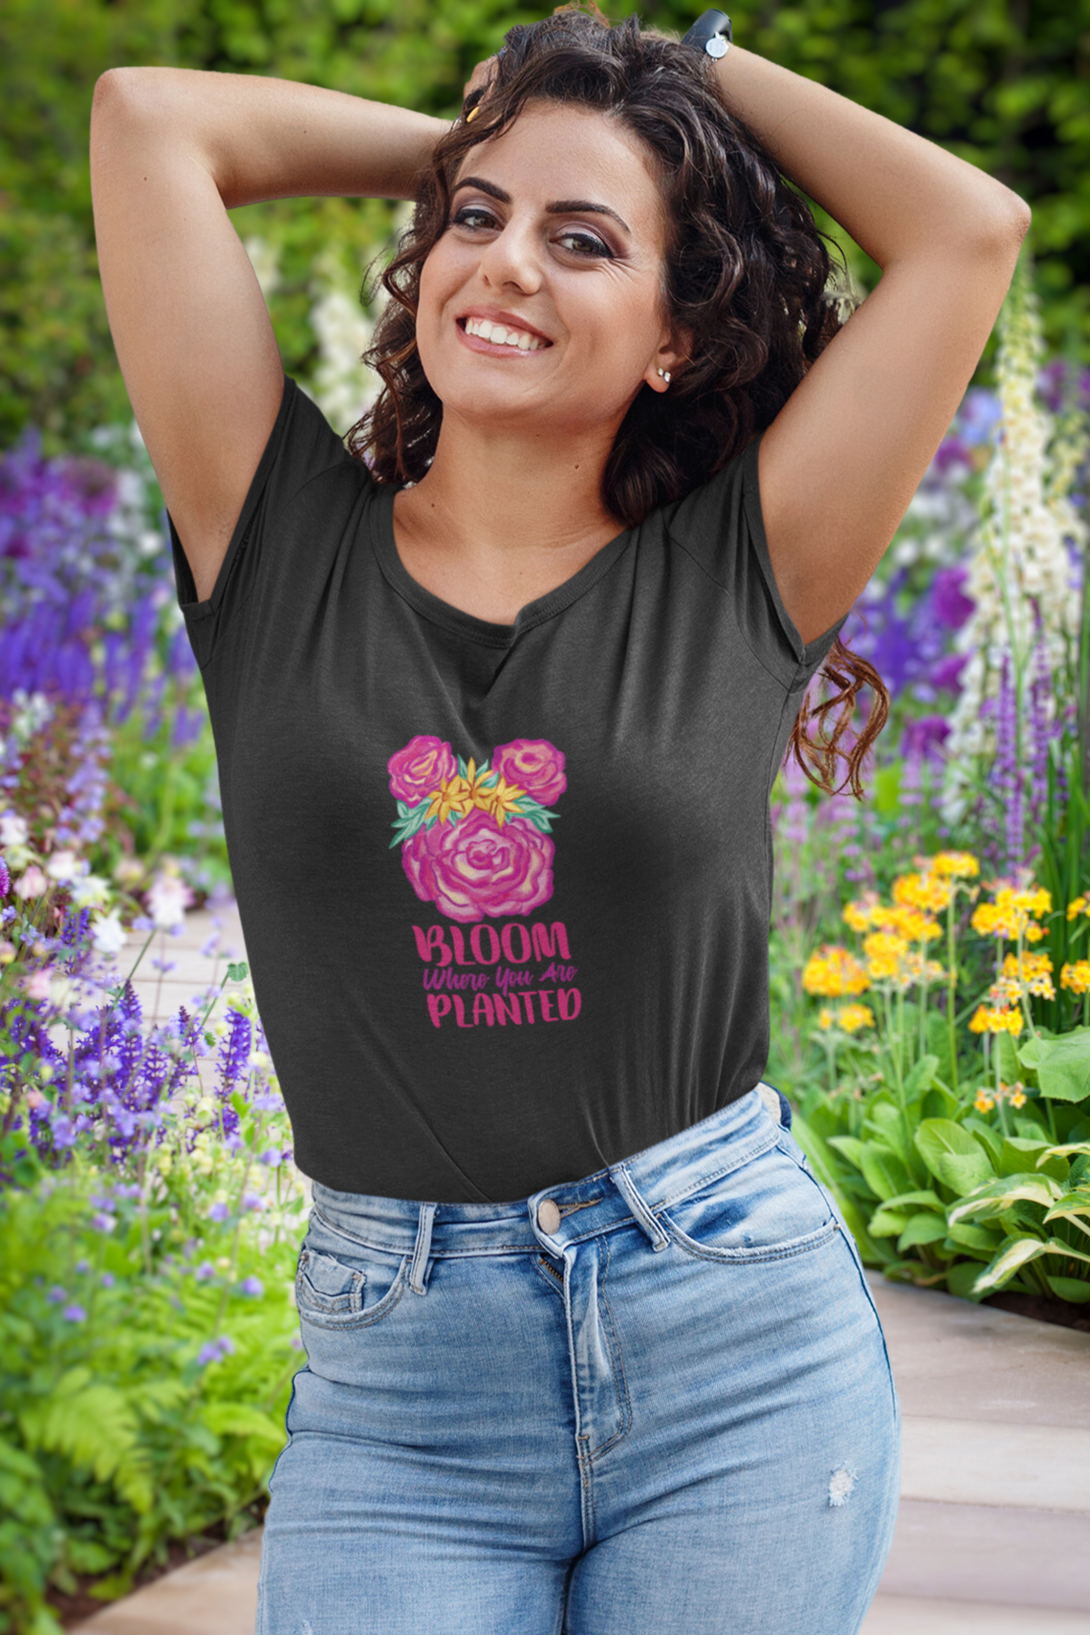 Blooming Flowers Printed Scoop Neck T-Shirt For Women - WowWaves - 6